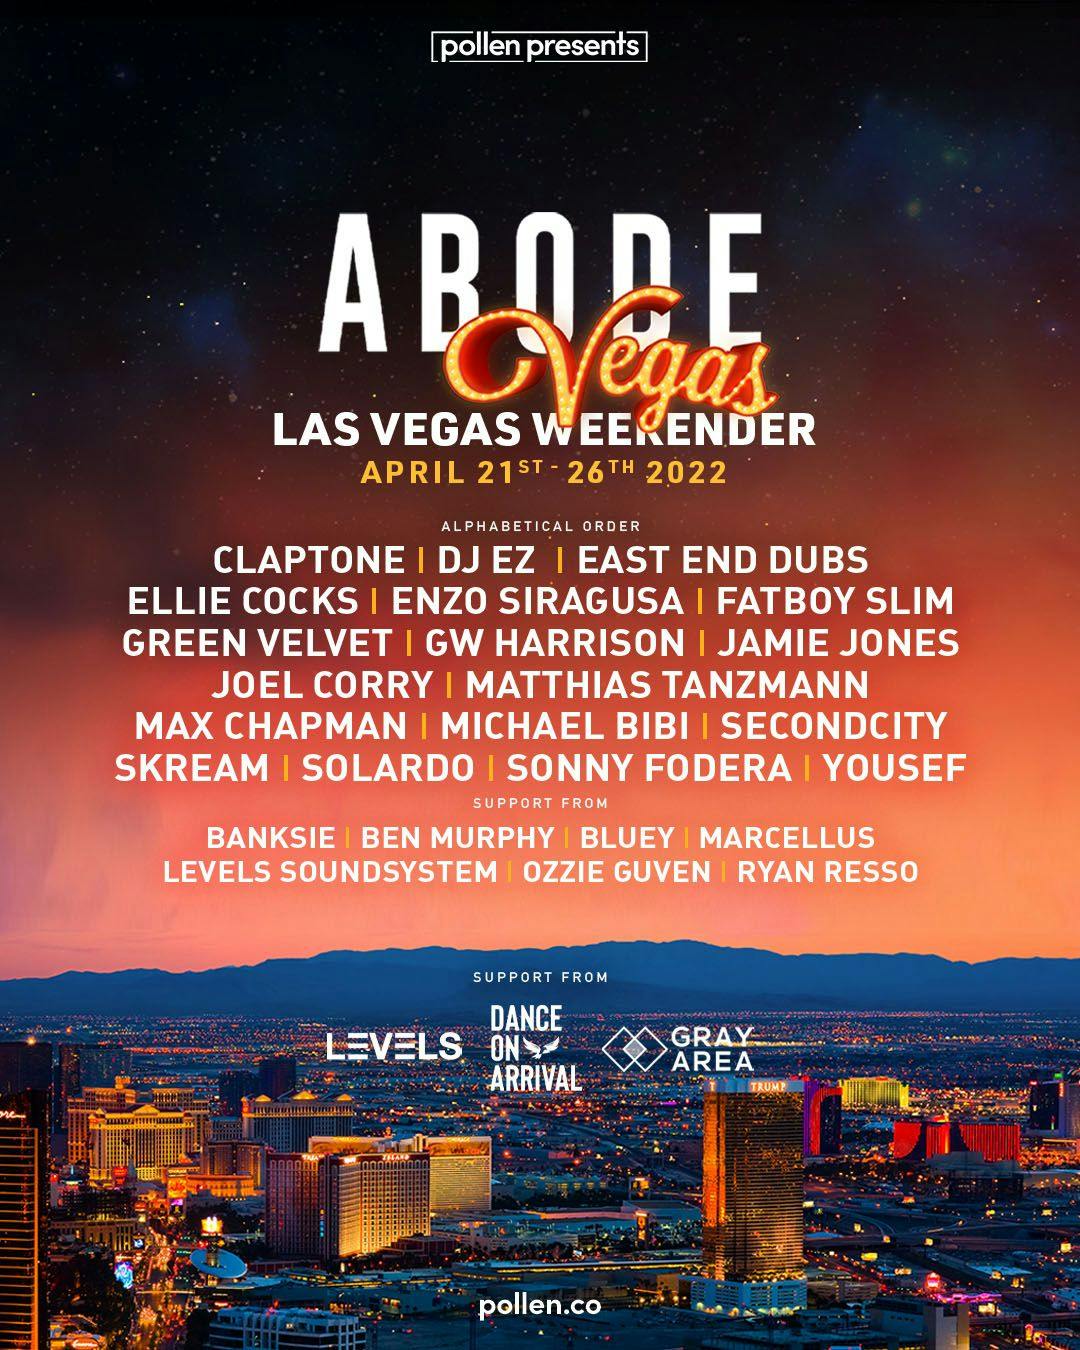 ABODE Las Vegas event artwork